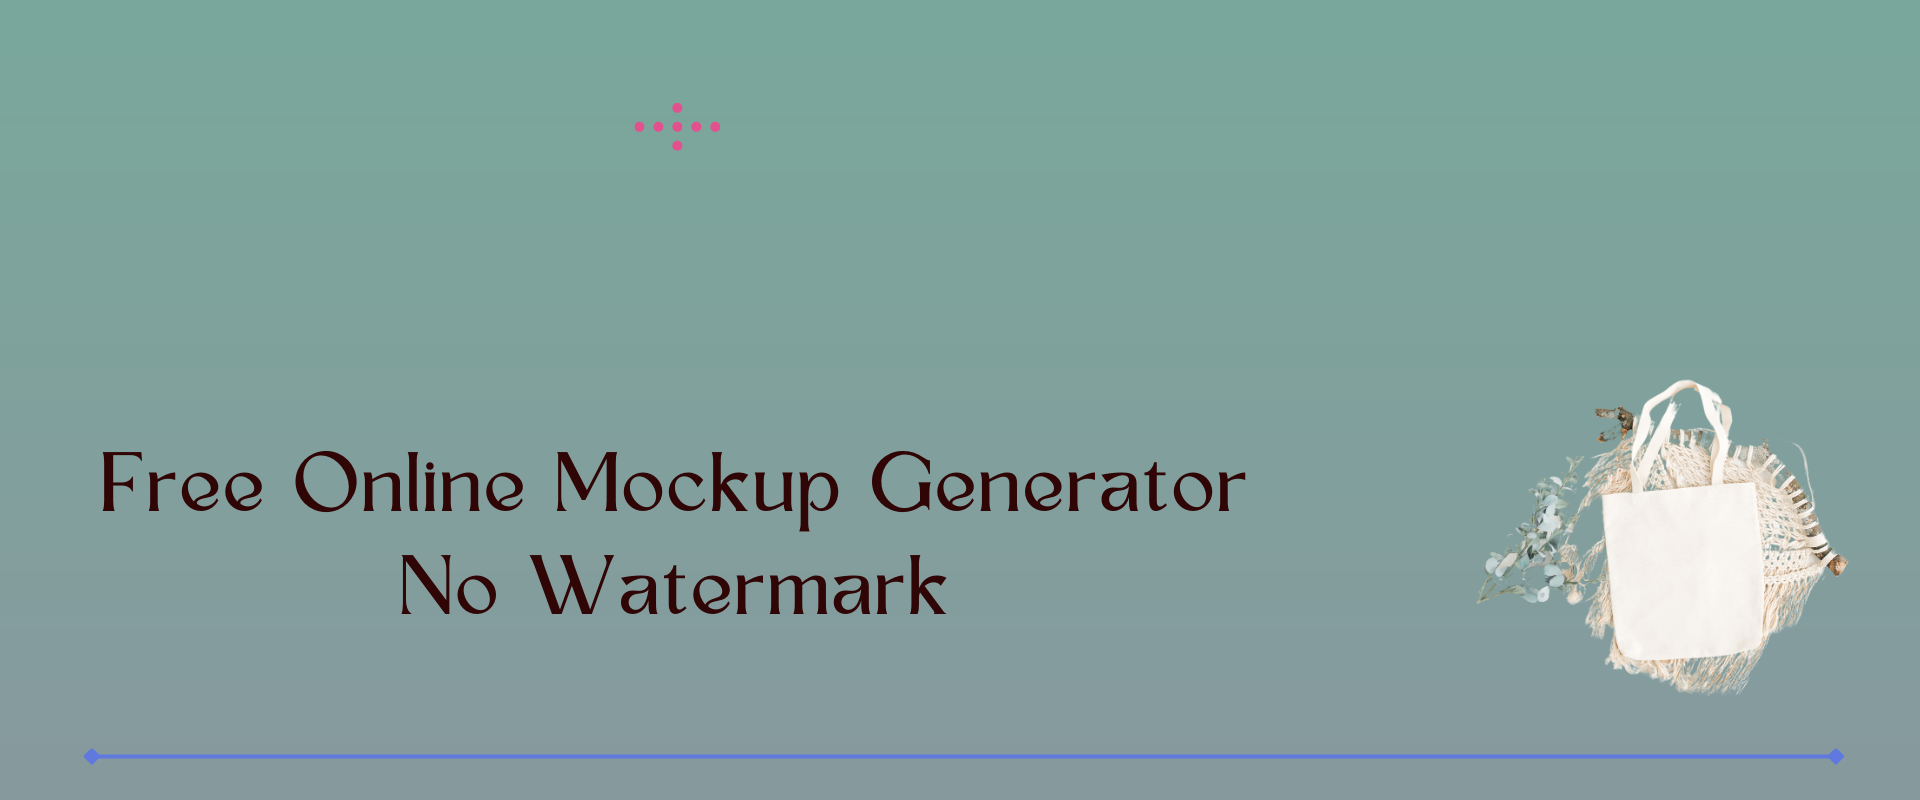 free online mockup generator no watermark